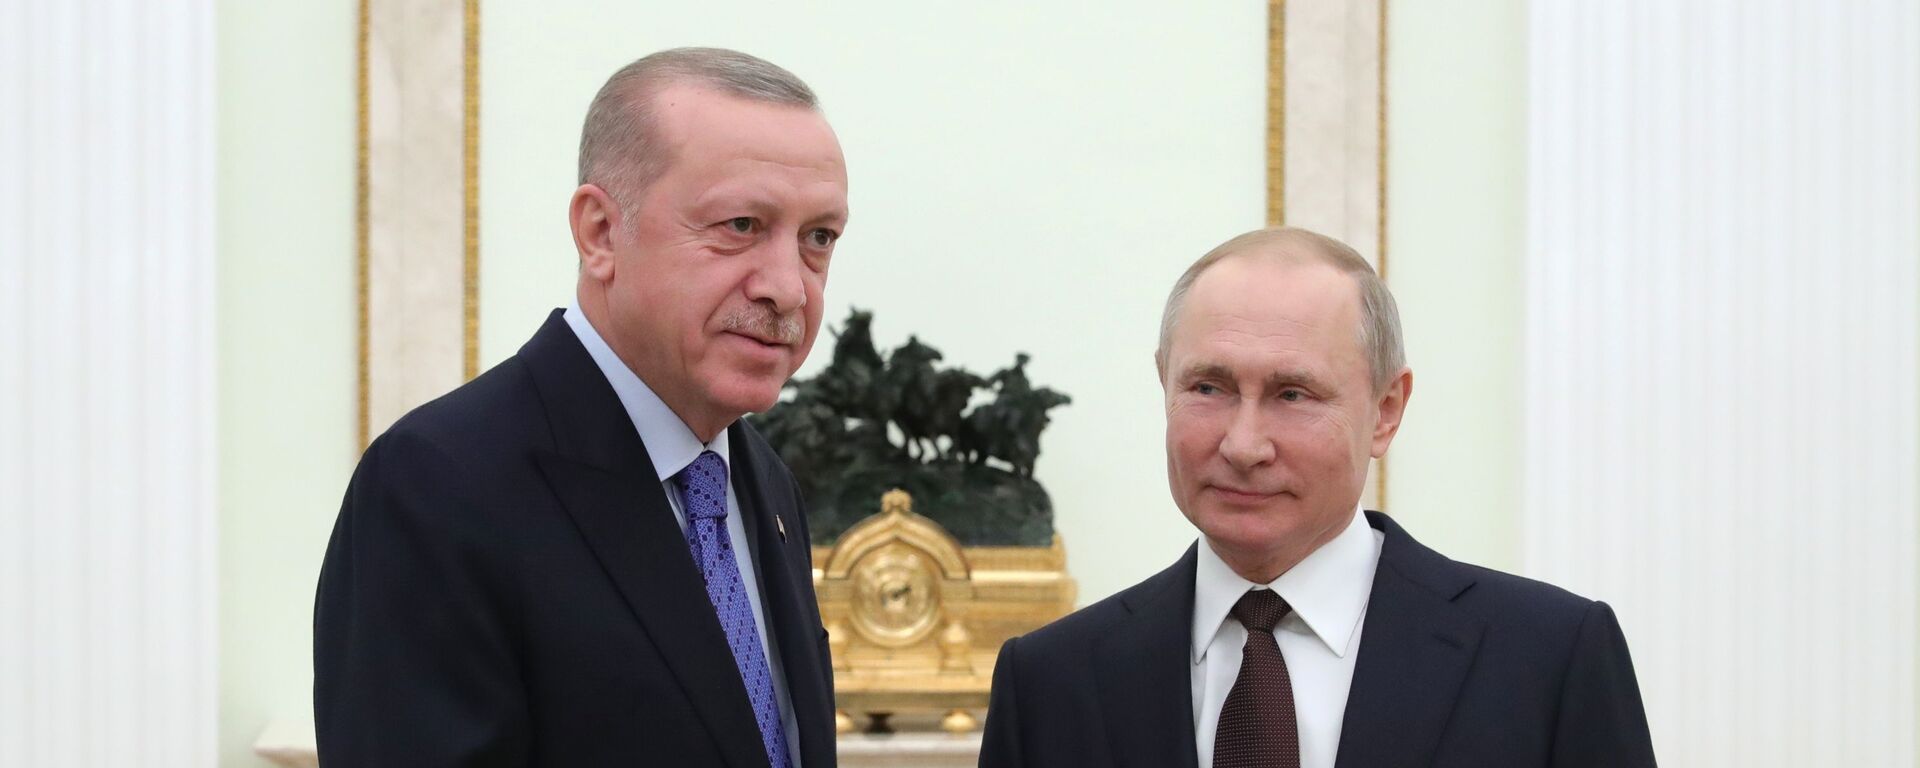 Президент РФ Владимир Путин и президент Турции Реджеп Тайип Эрдоган (слева) во время встречи - Sputnik Азербайджан, 1920, 01.03.2021